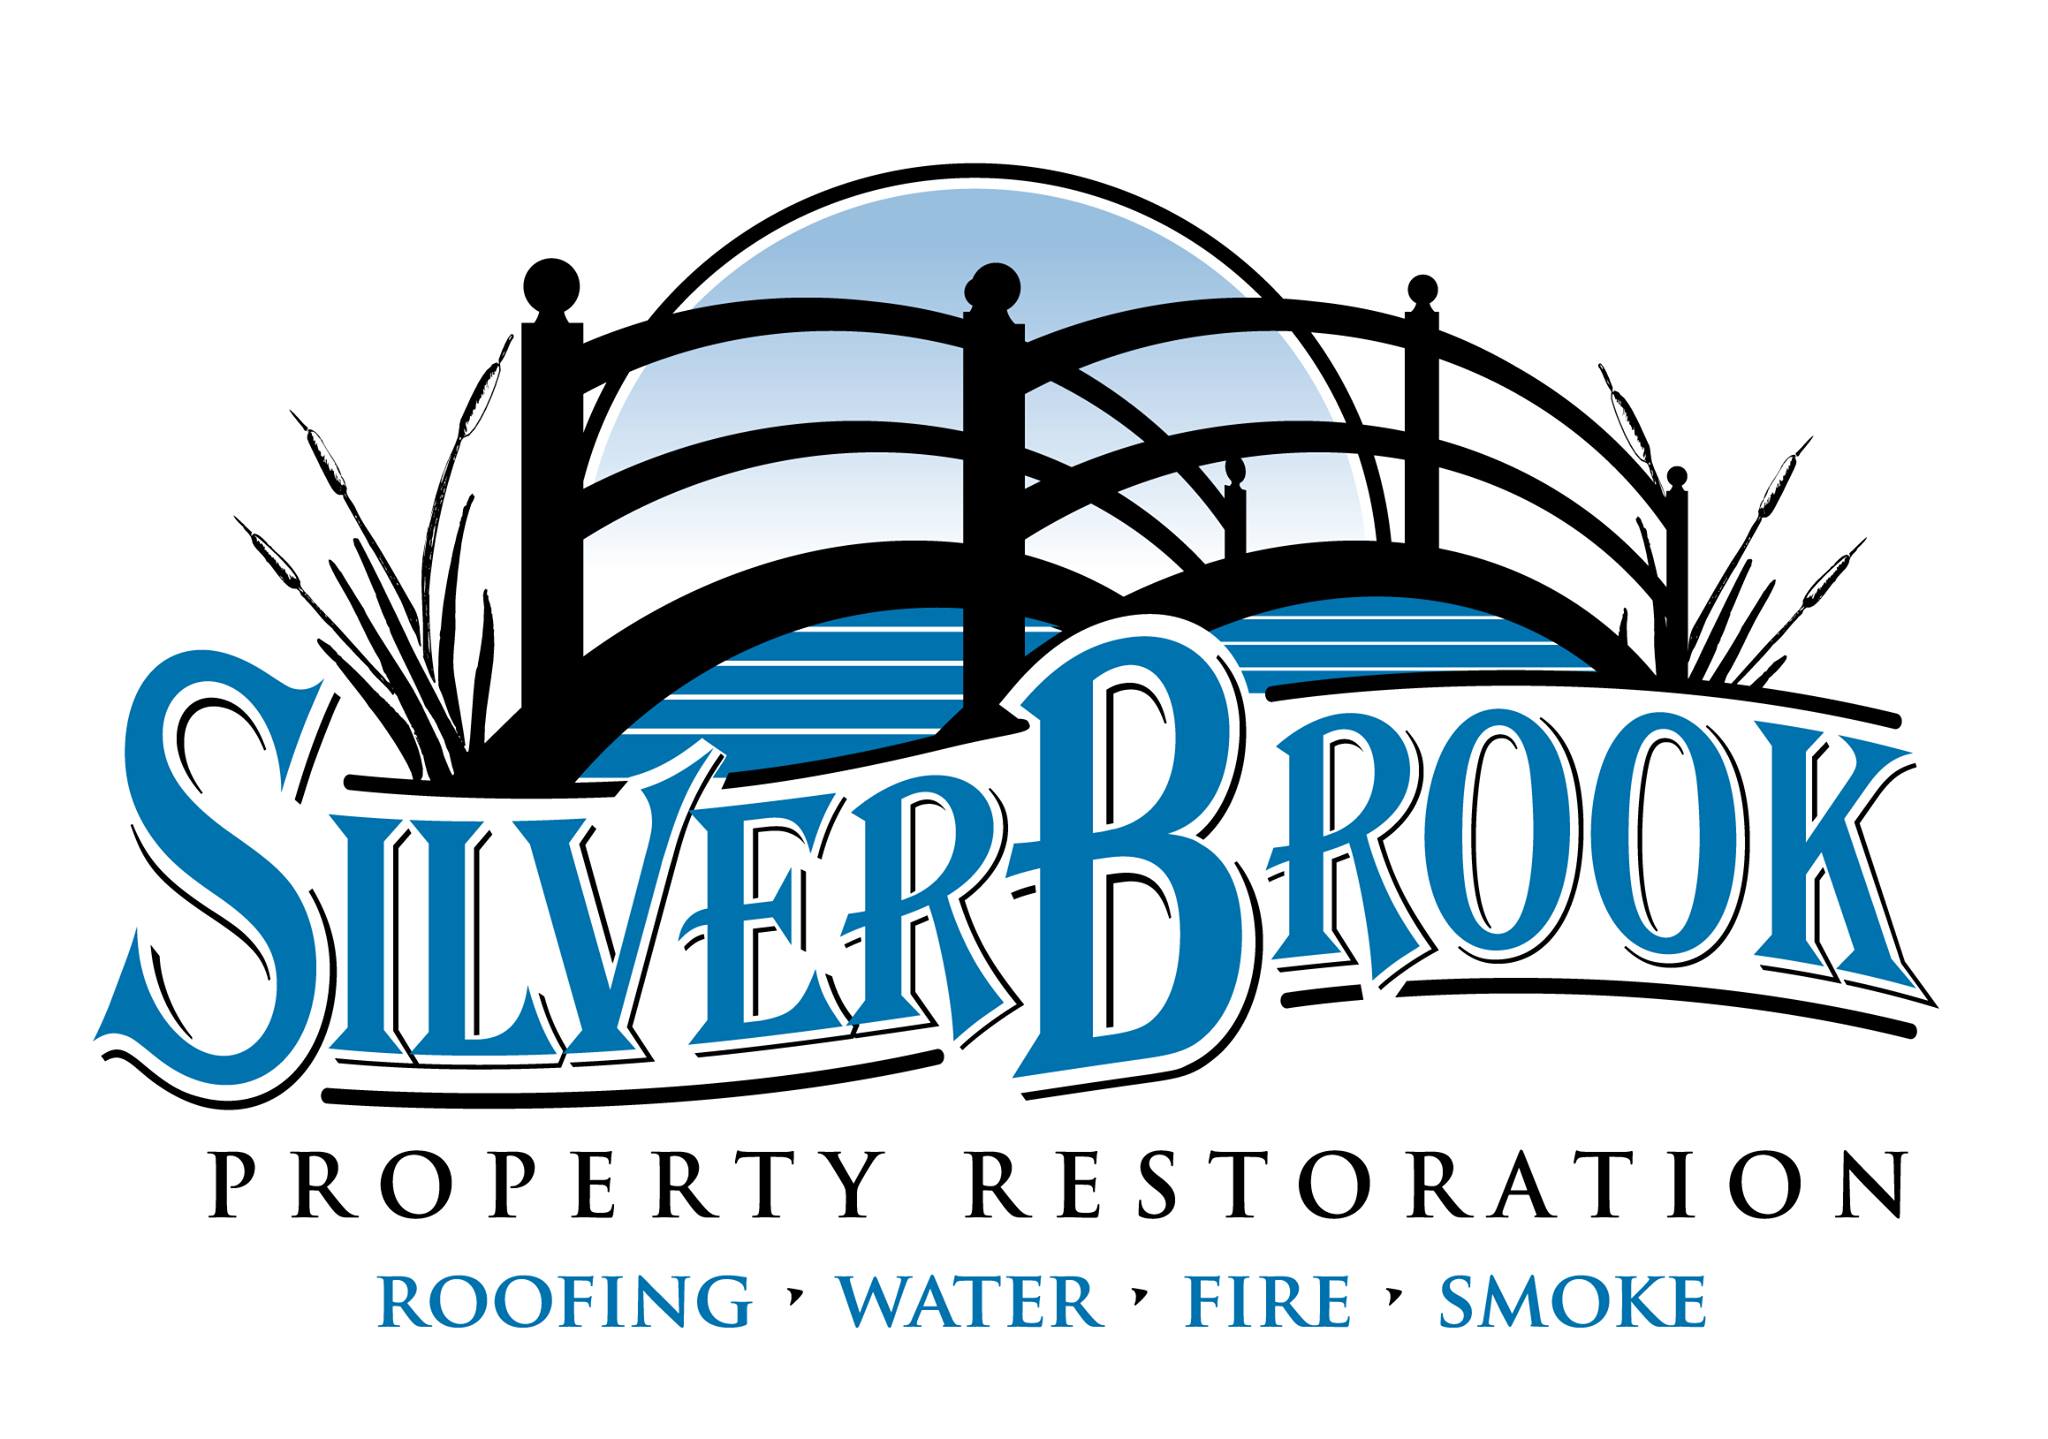 SilverBrook Property Restoration logo